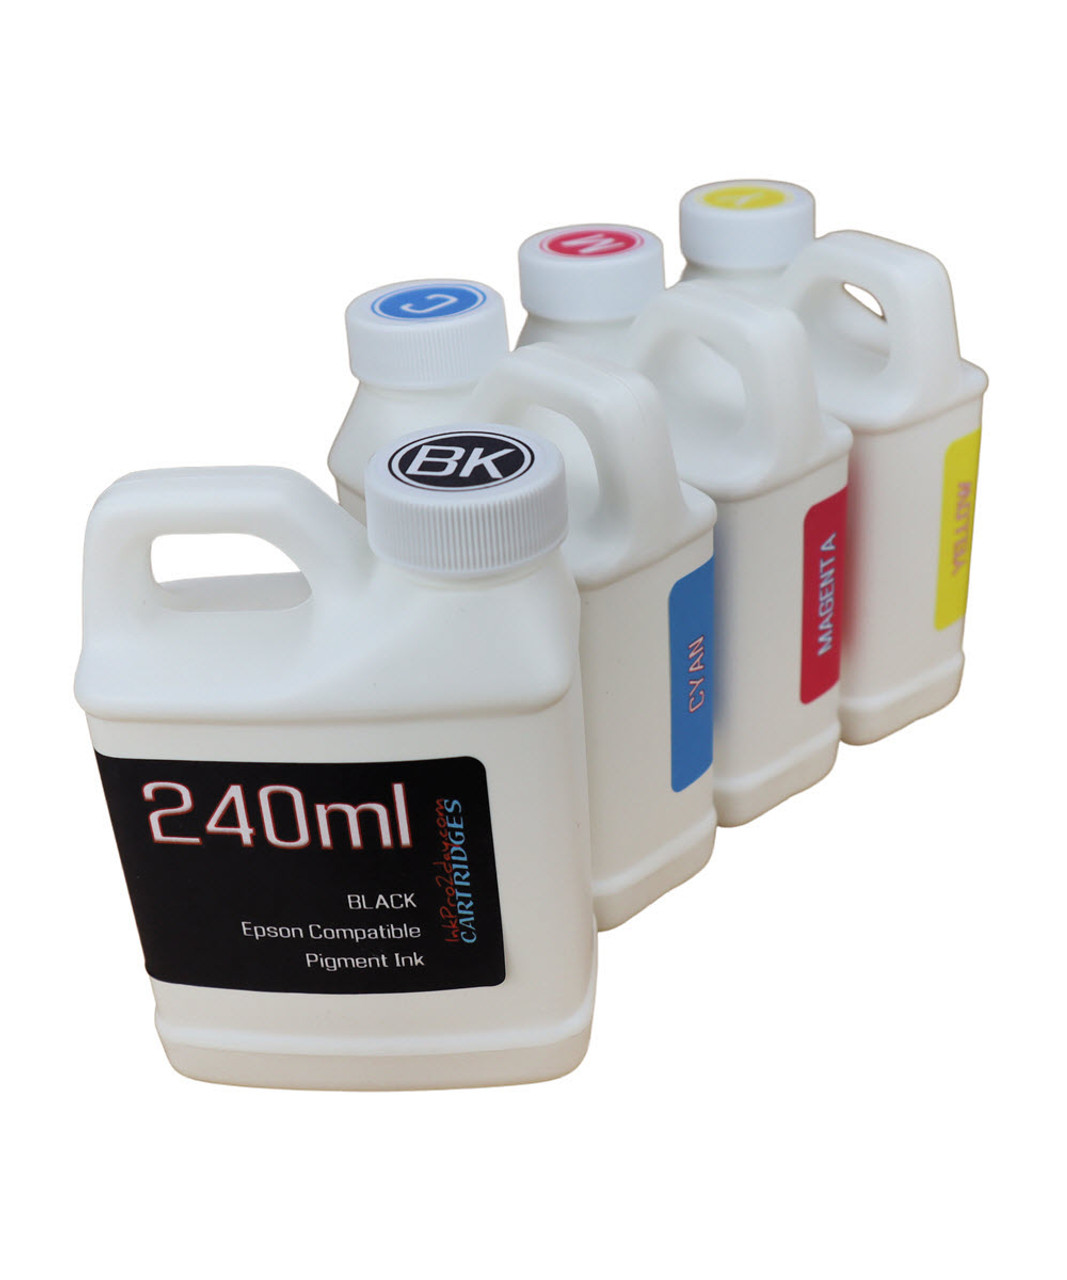 EPSON WorkForce ET-4550 EcoTank Printer 4 Color Package 240ml Pigment Bottle Ink 